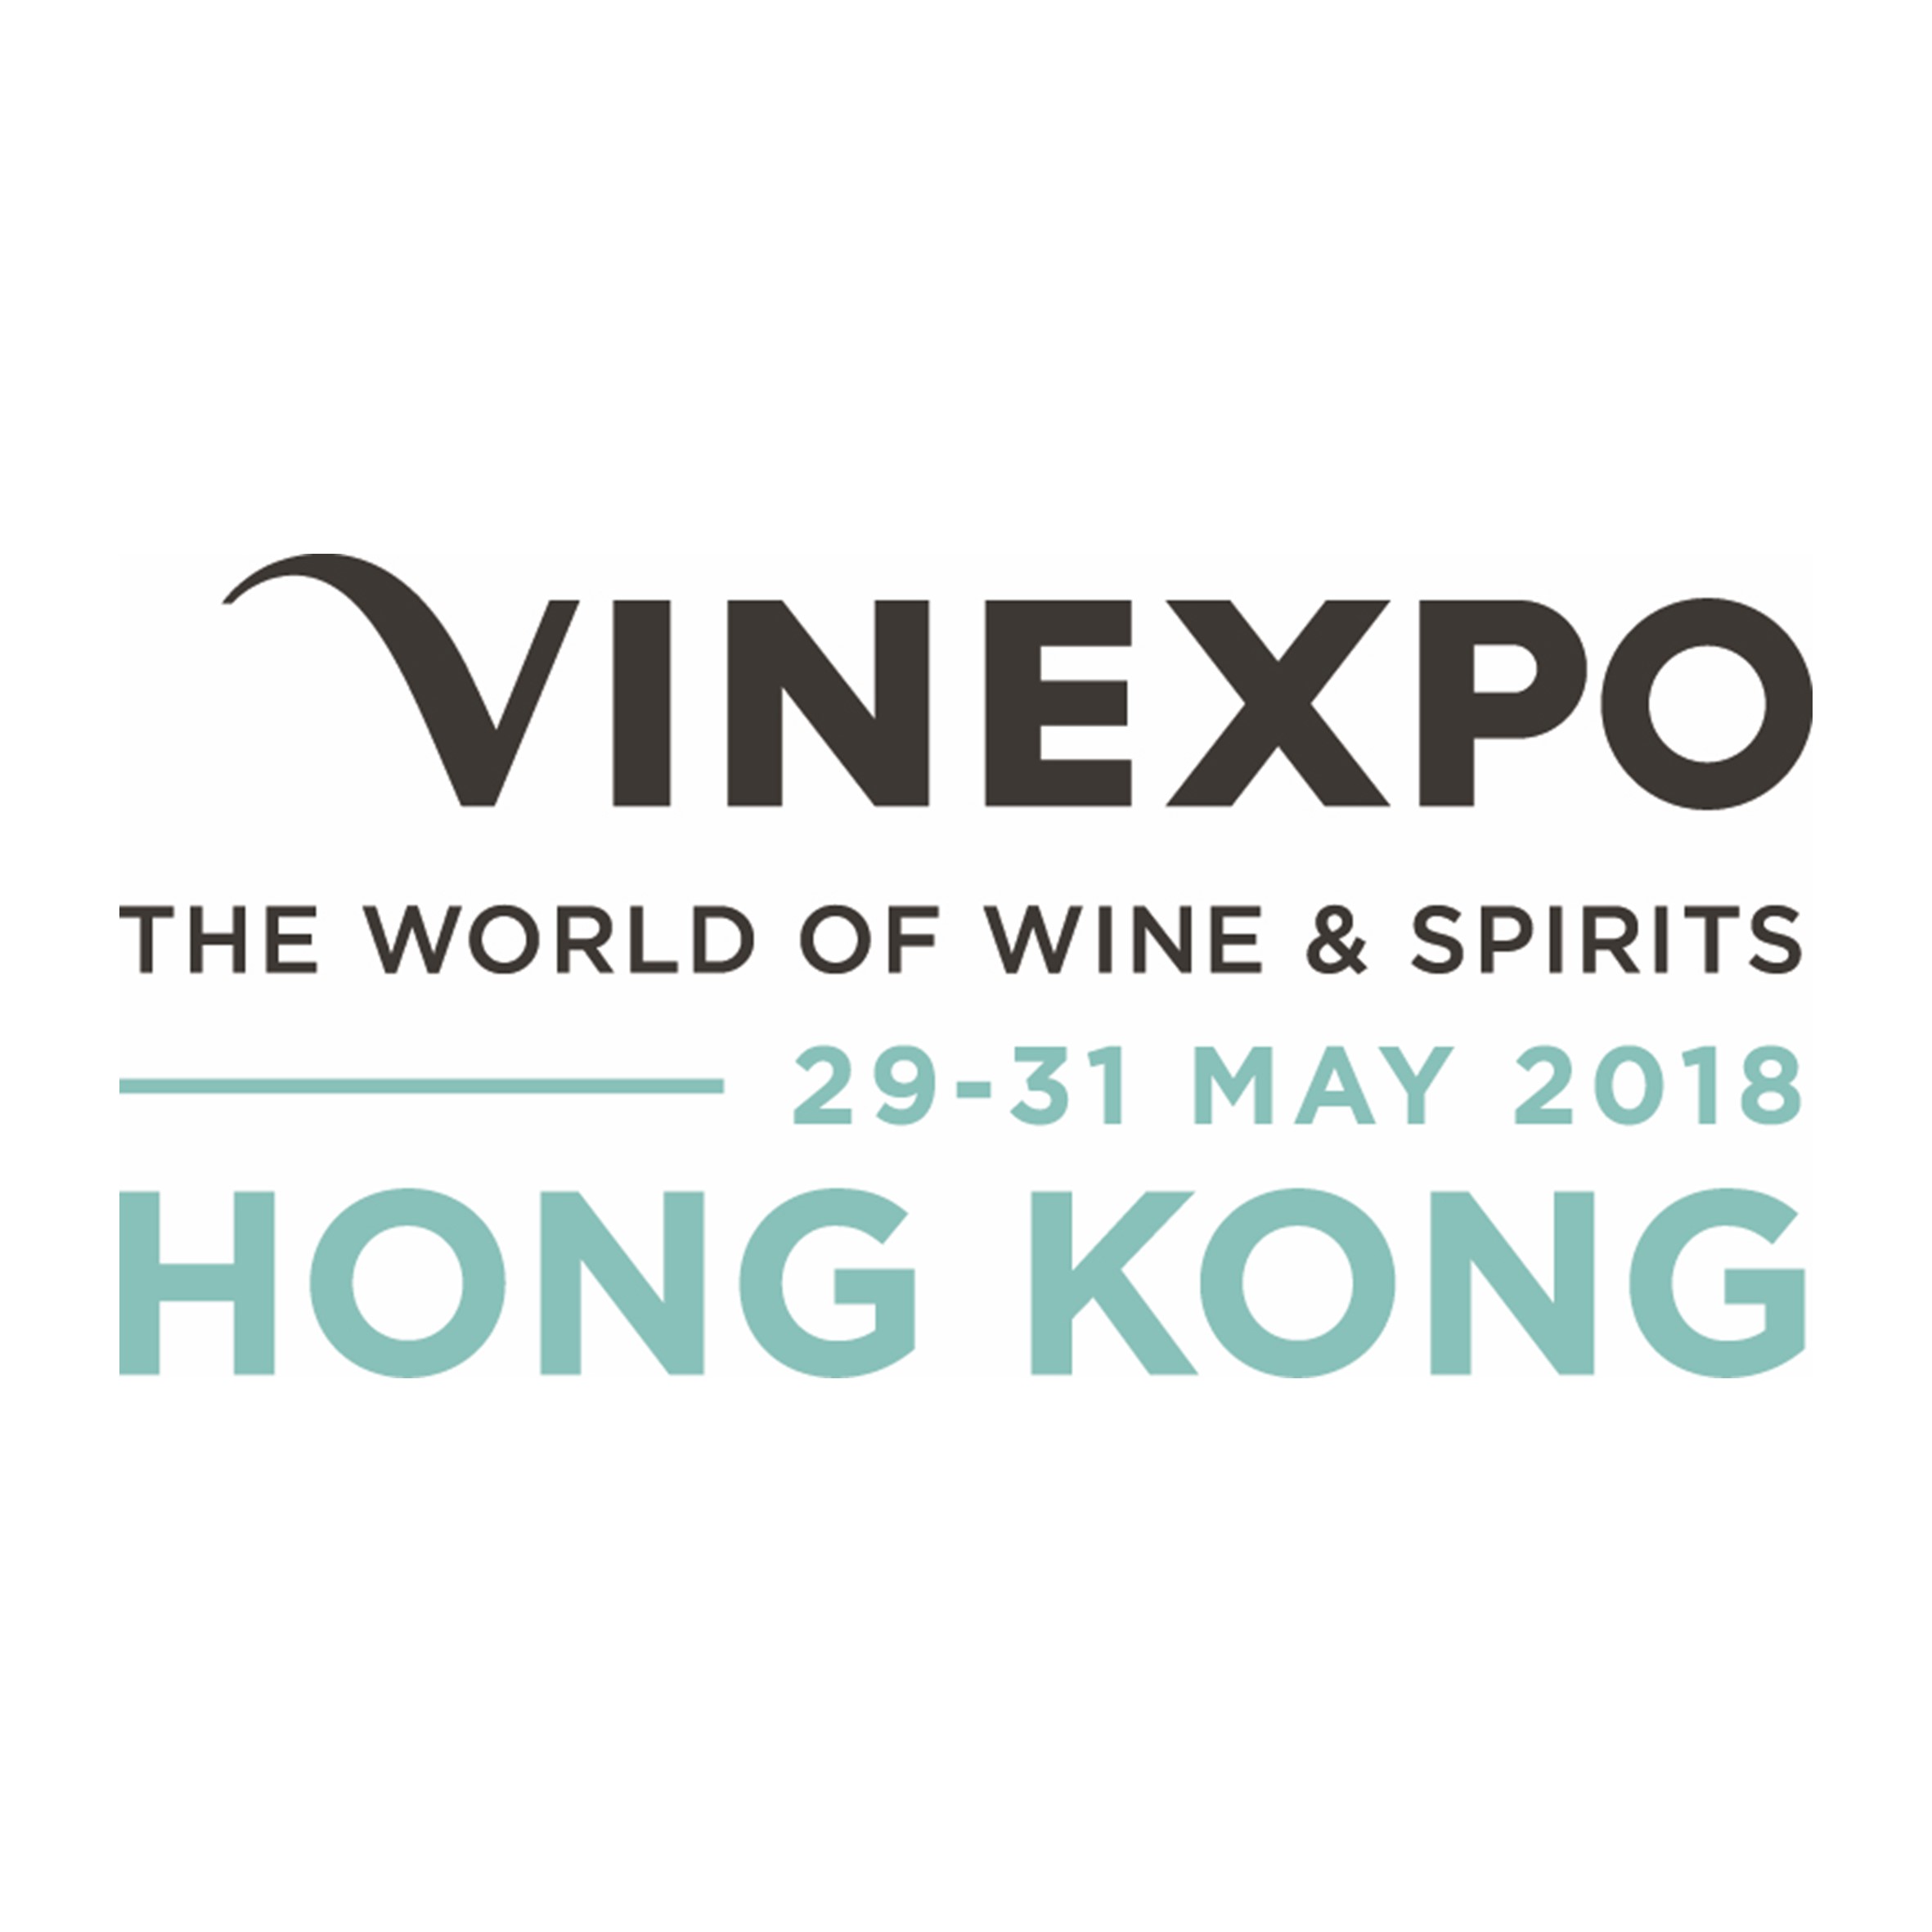 Vinexpo Hong Kong Logo 2018 - Trade expert interviews now available in Australia: